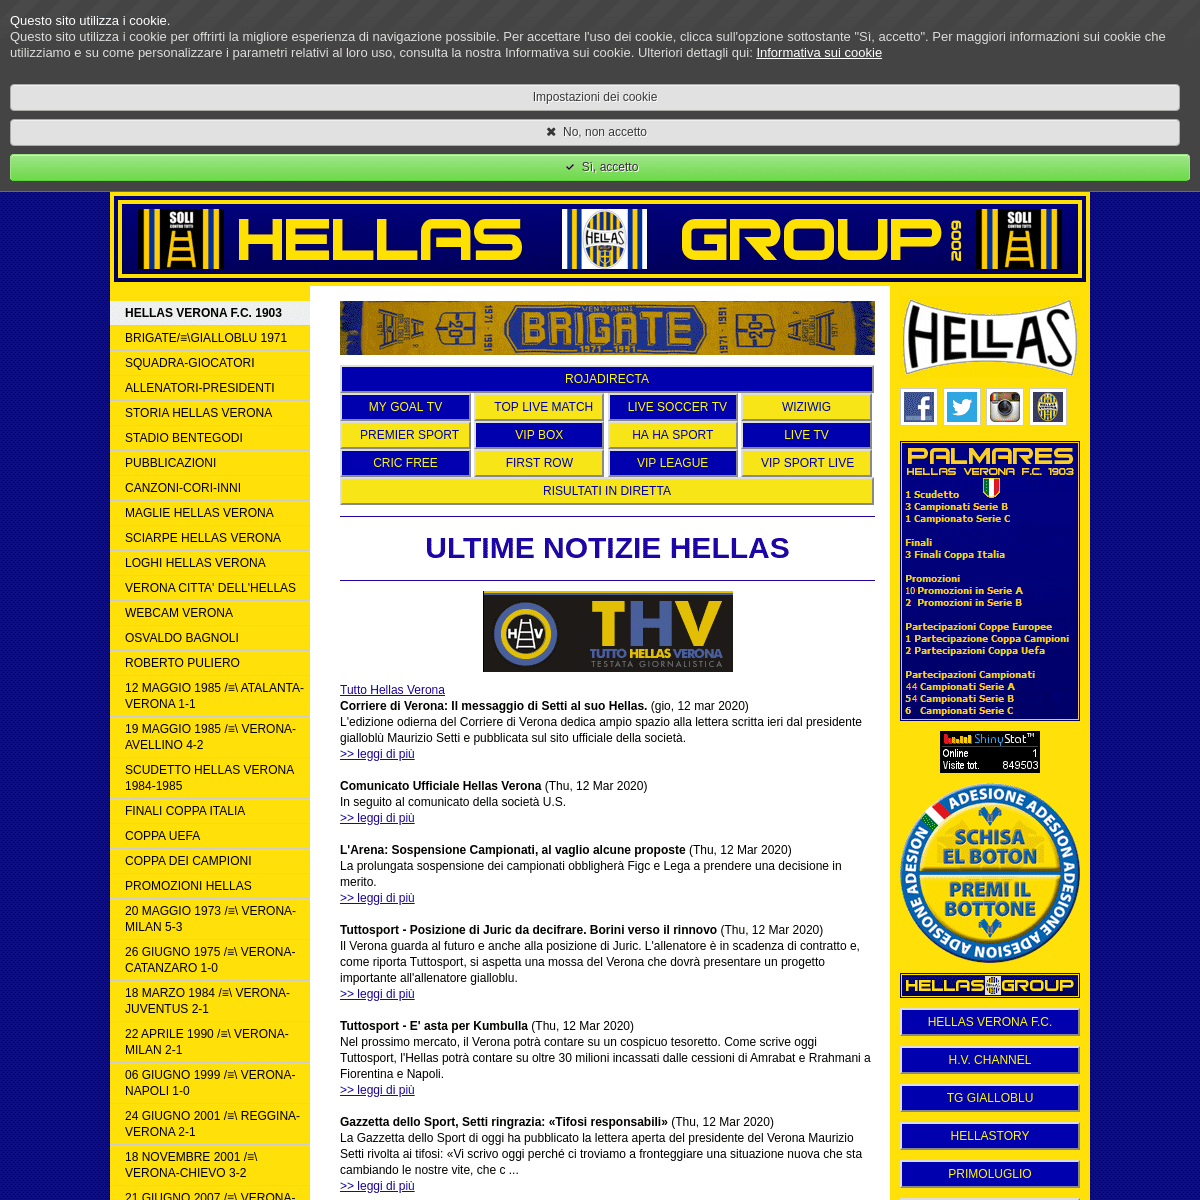 A complete backup of hellasgroup.jimdo.com